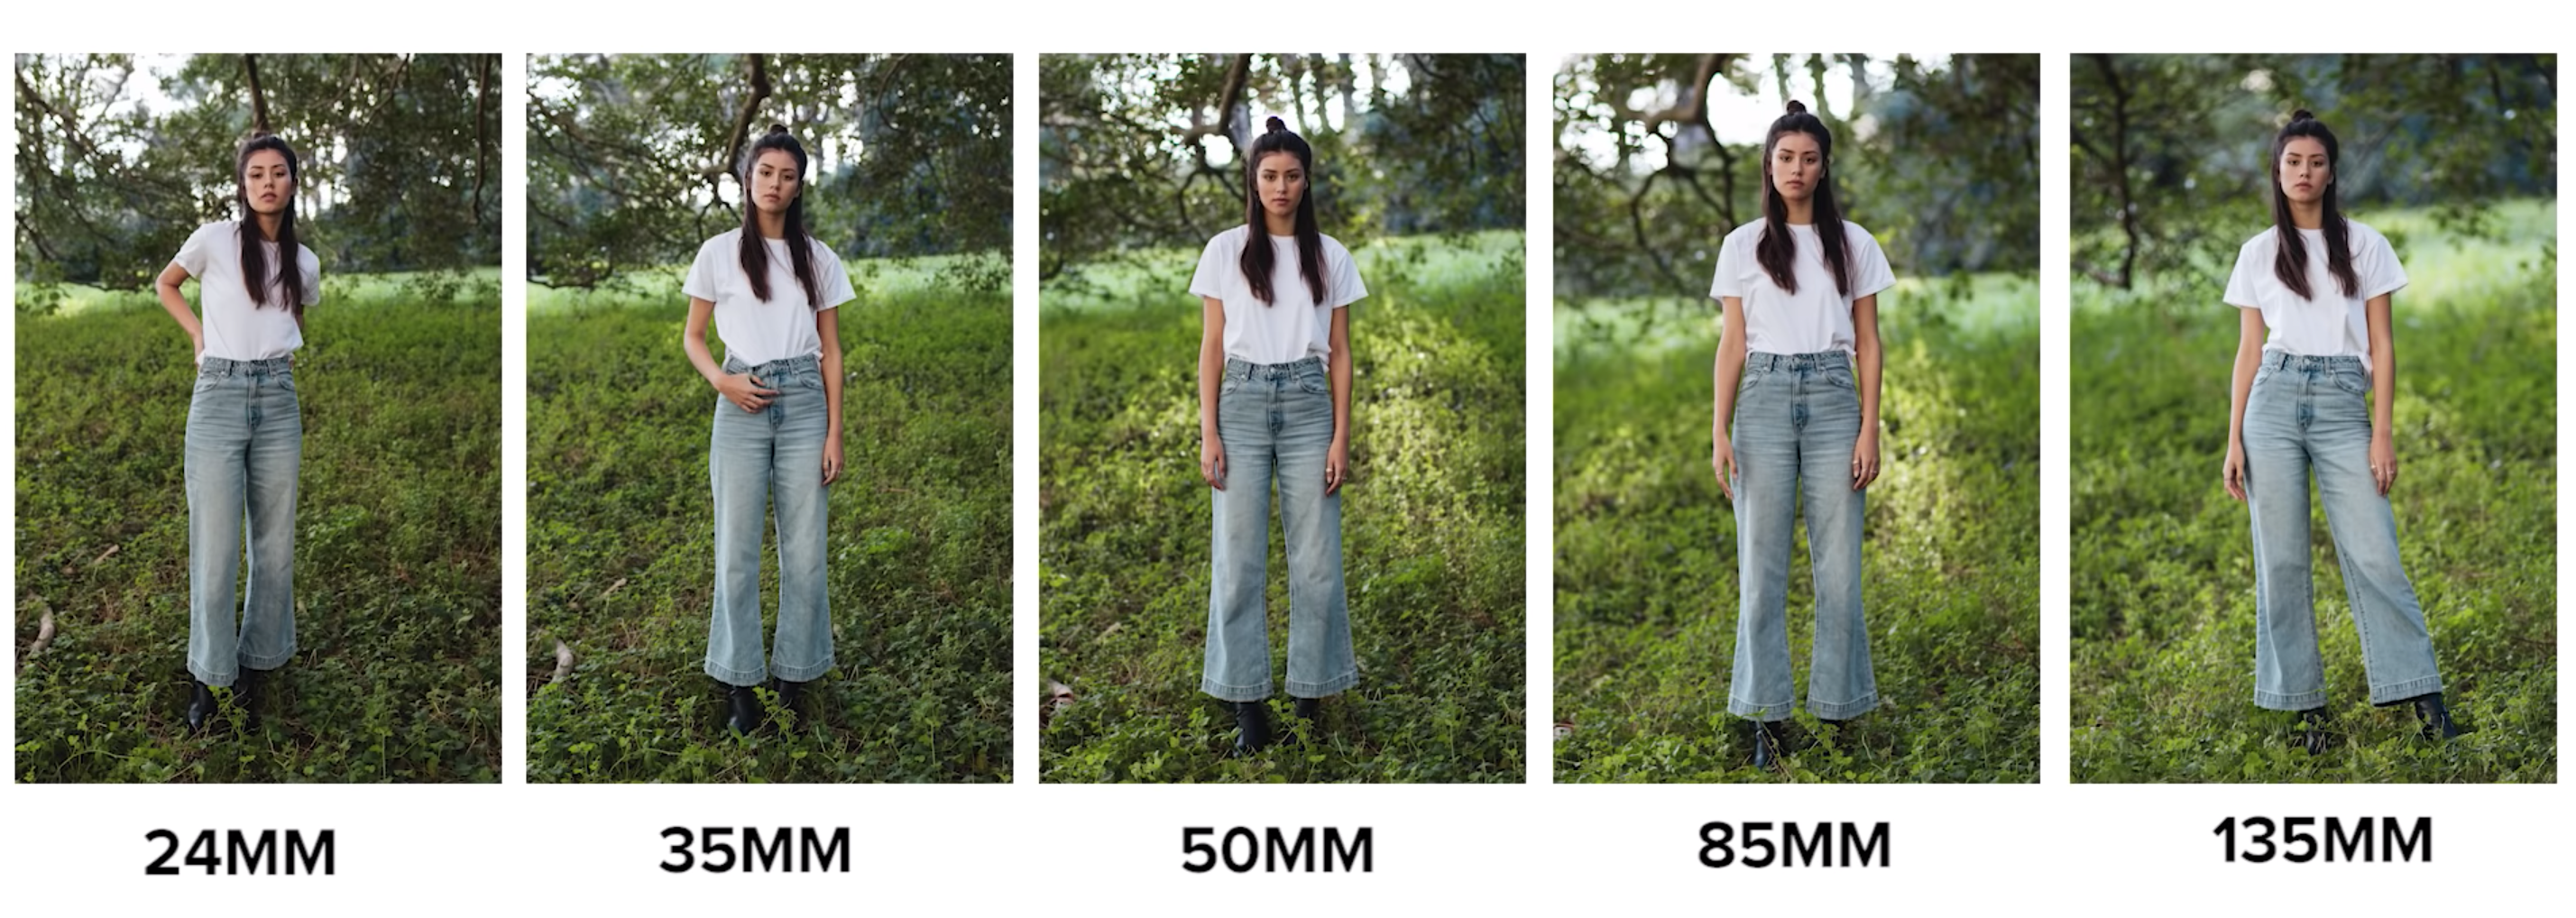 Legende Sluiting Gewoon doen Crop Sensor Portrait Shootout: 24m vs 35mm vs 50mm vs 85mm vs 135mm |  PetaPixel